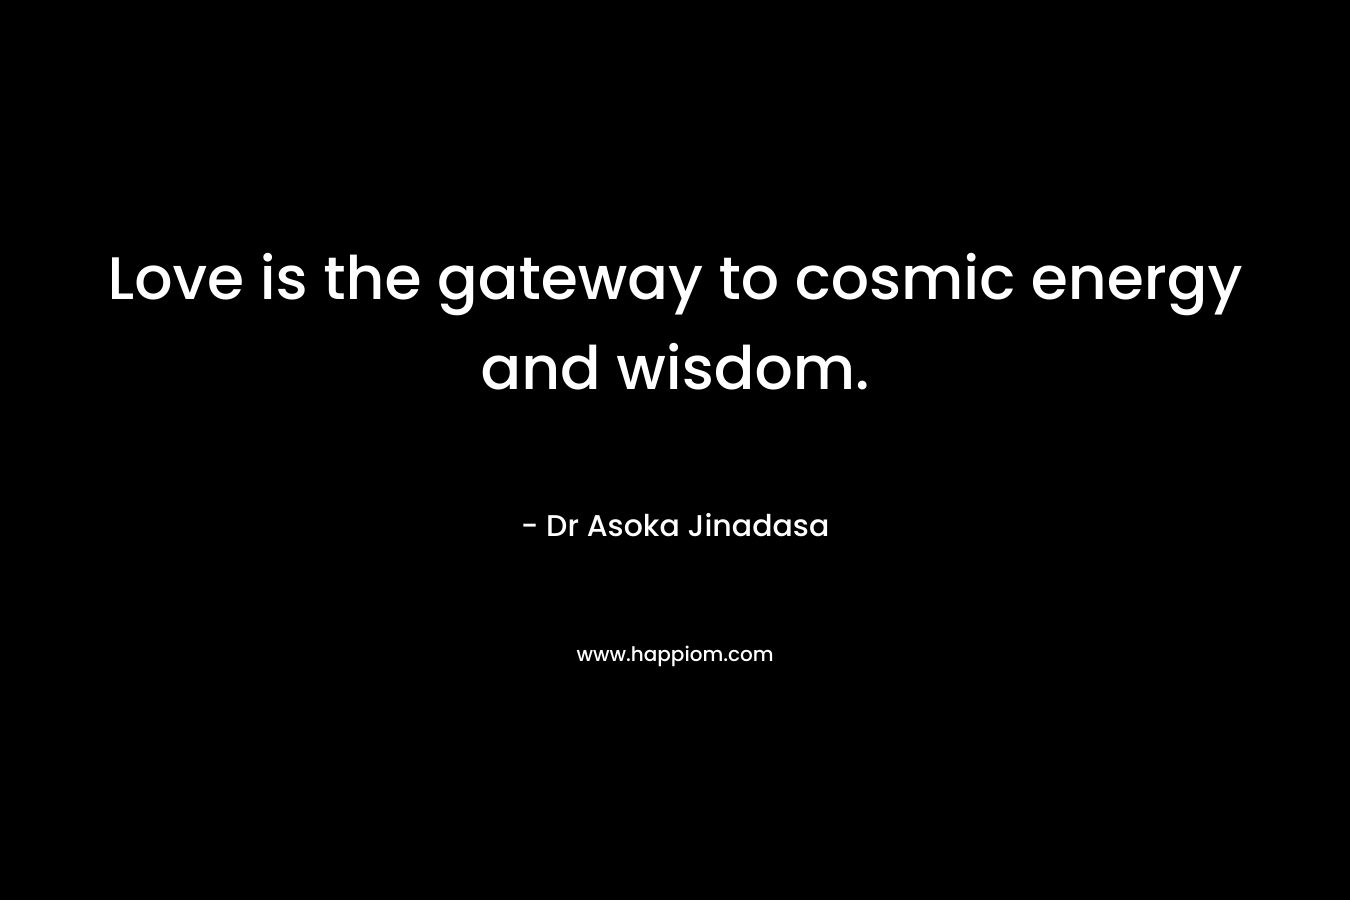 Love is the gateway to cosmic energy and wisdom. – Dr Asoka Jinadasa